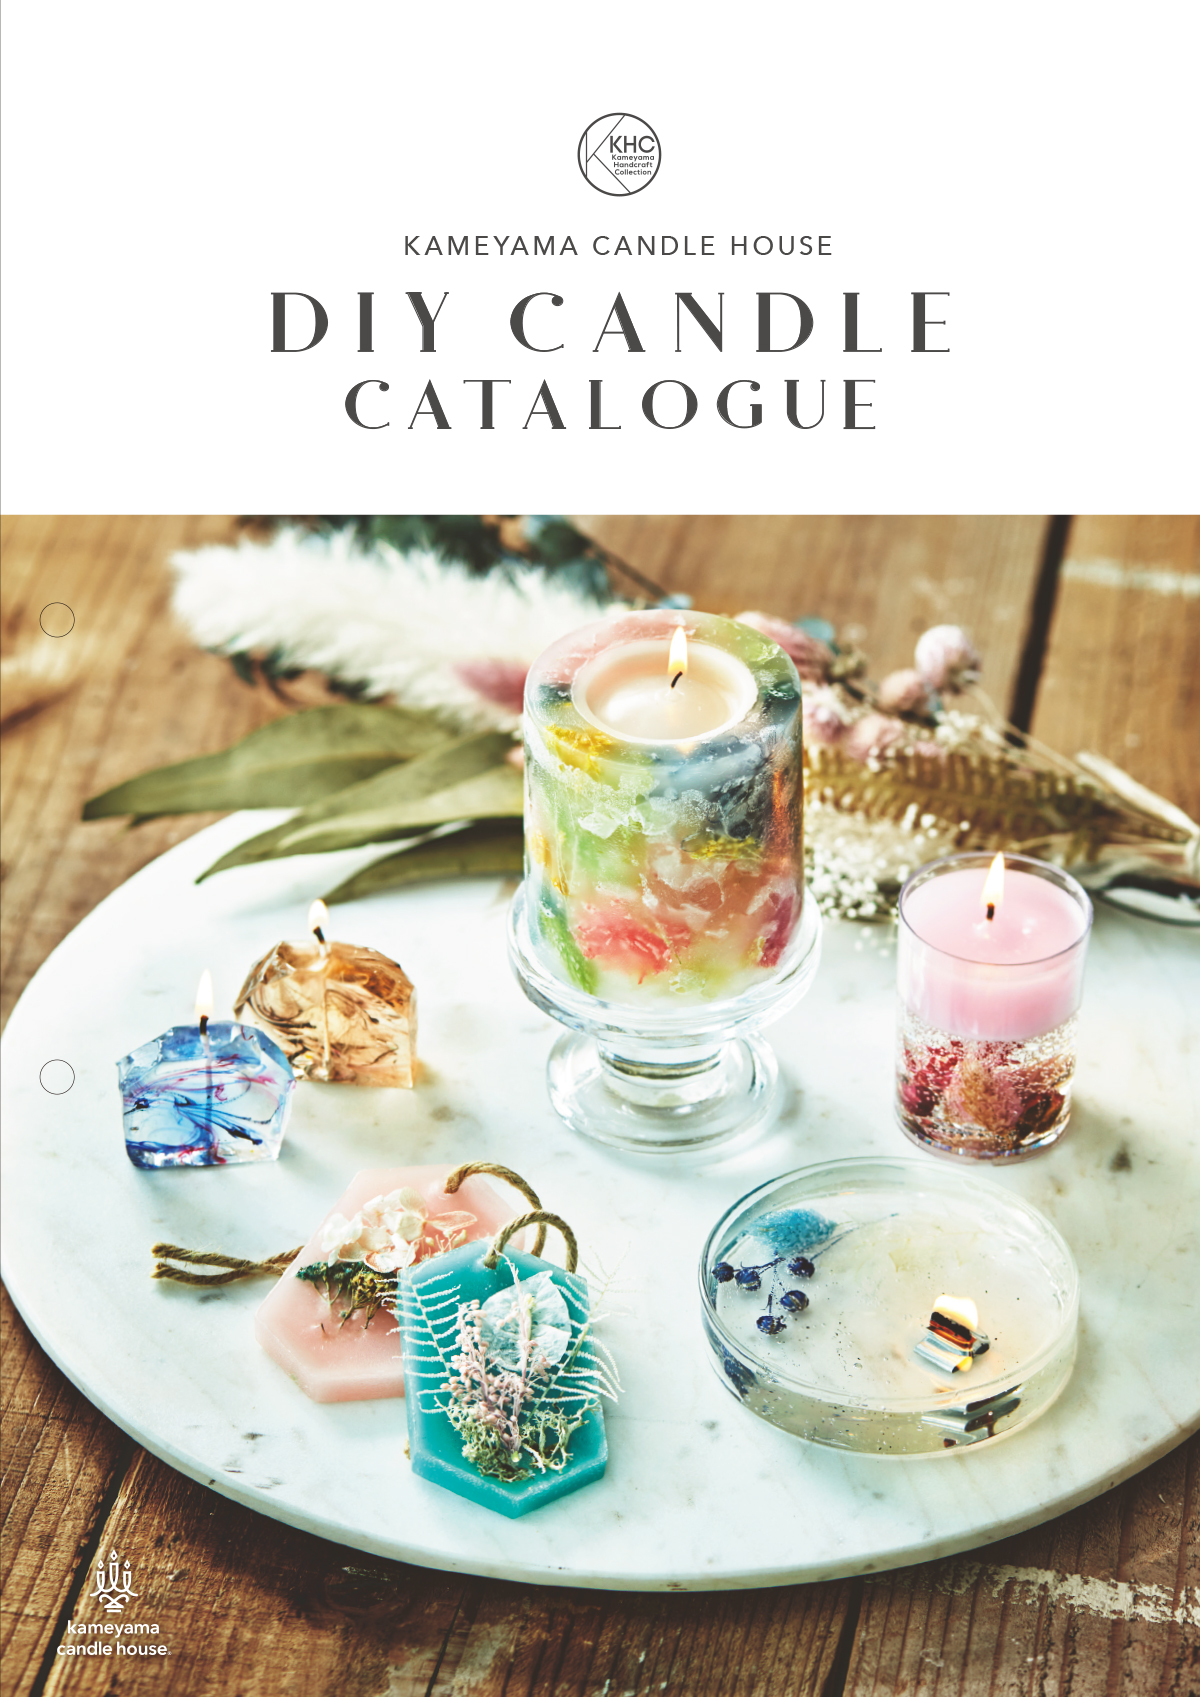 DIY CANDLE CATALOG 2021 | Kameyama Candle House | カメヤマキャンドルハウス